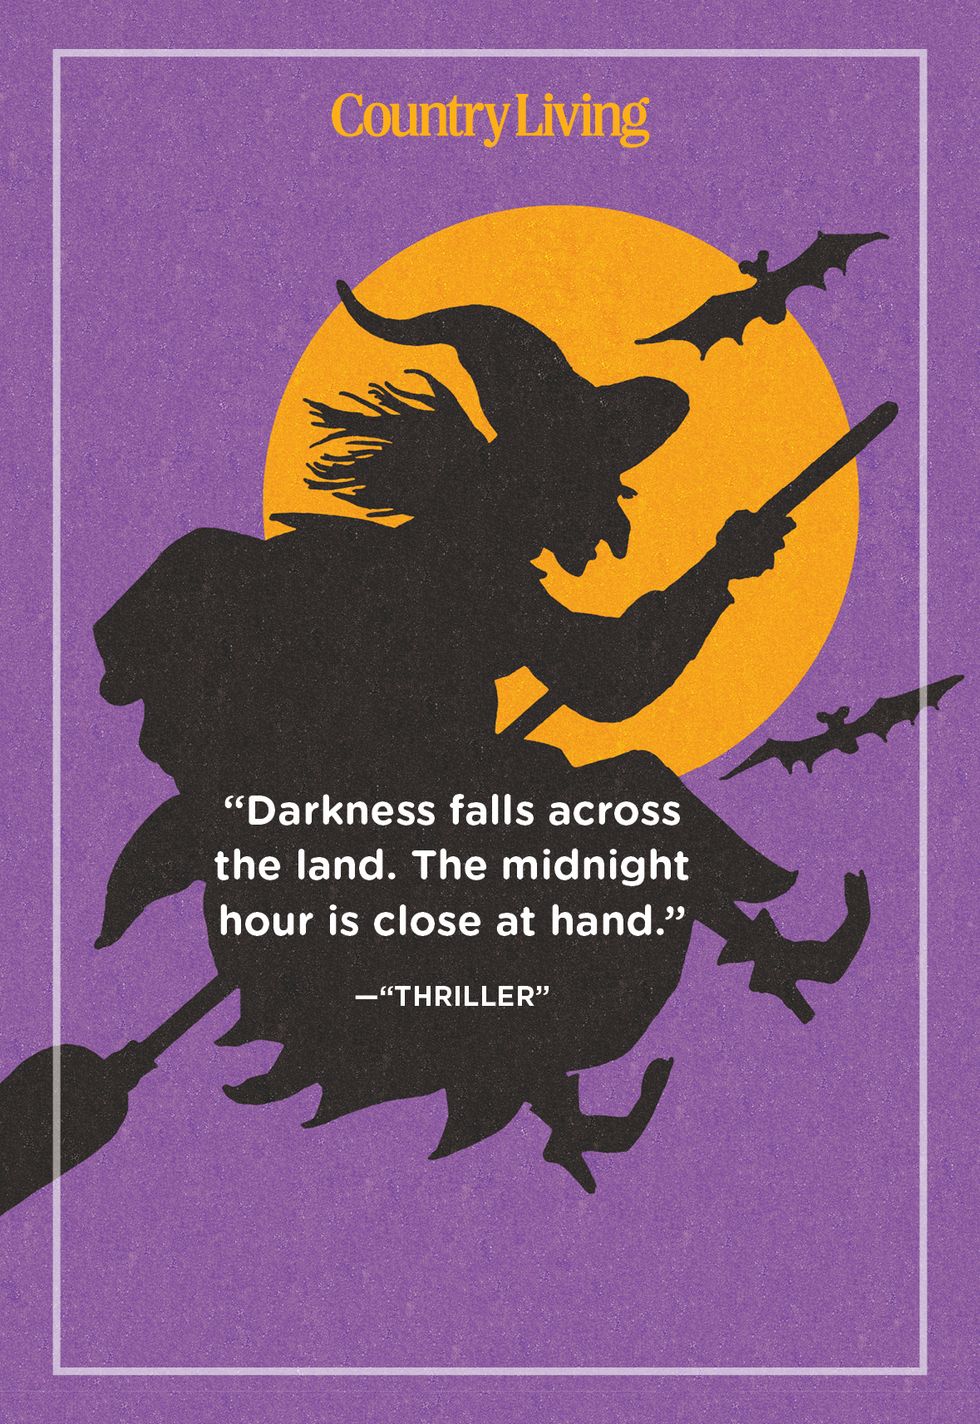 spooky halloween quote from thriller lyrics